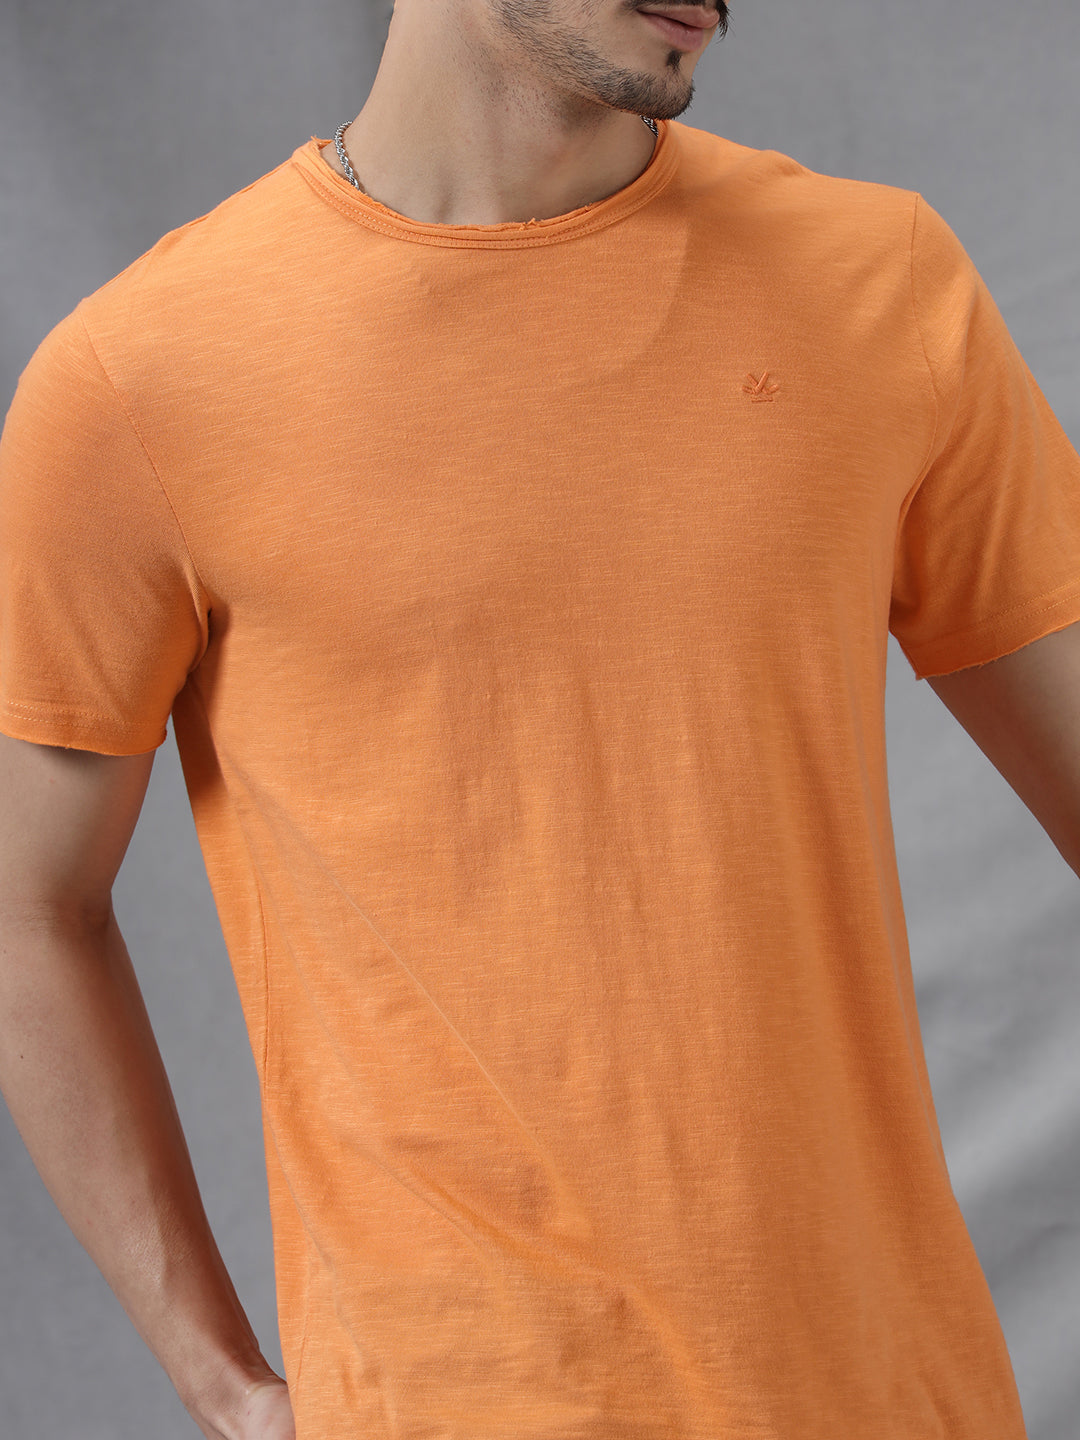 Solid Orange Crew Neck T-Shirt